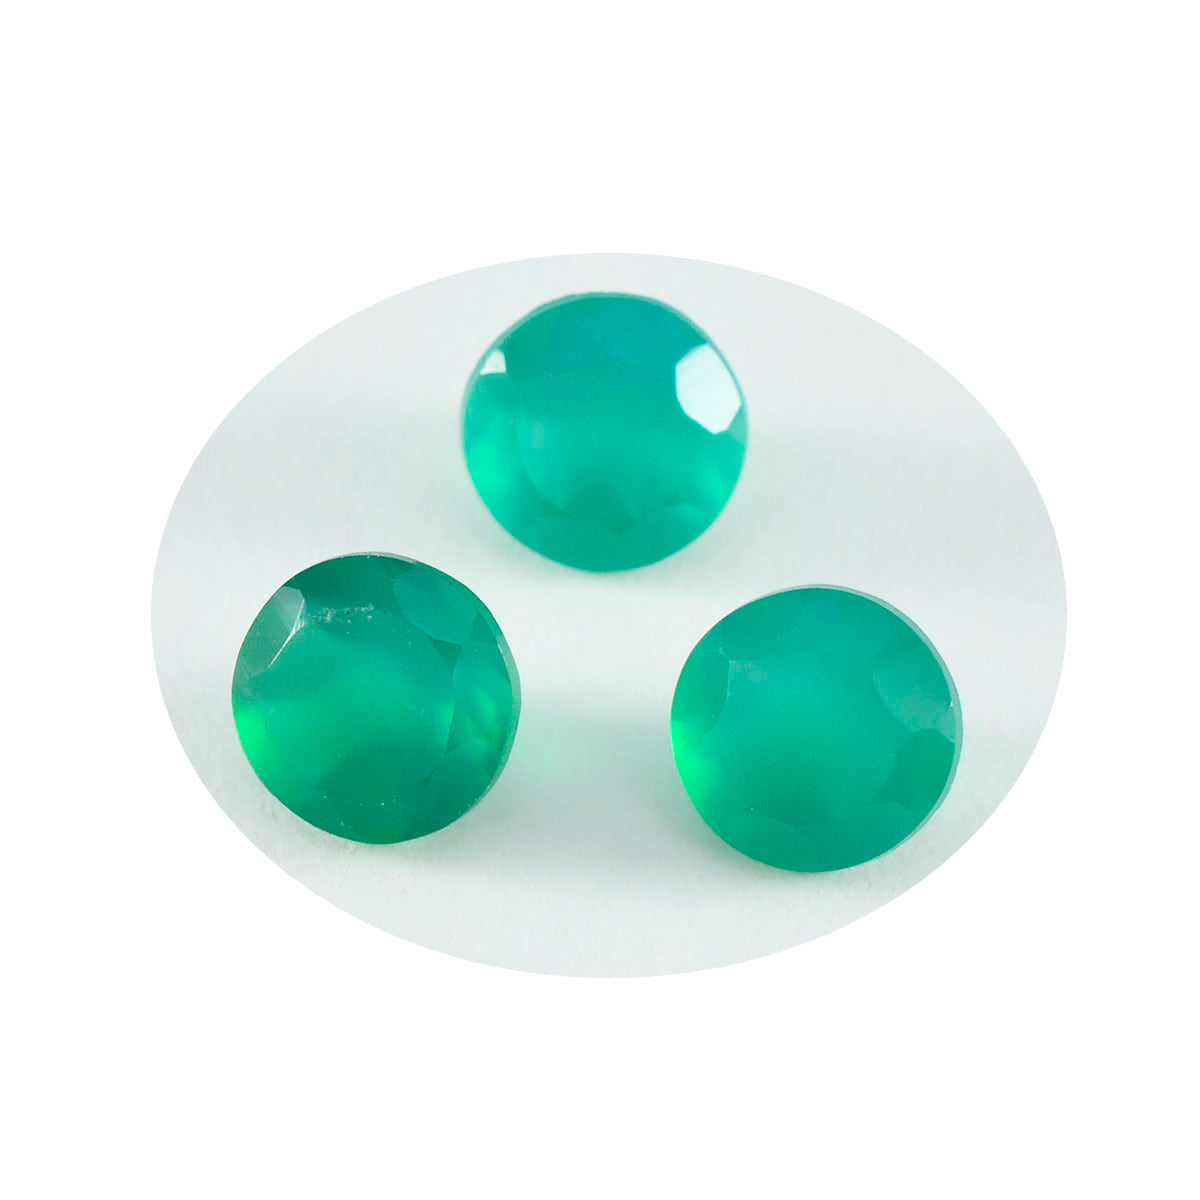 Riyogems 1PC Real Green Onyx Faceted 6x6 mm Round Shape Good Quality Gems